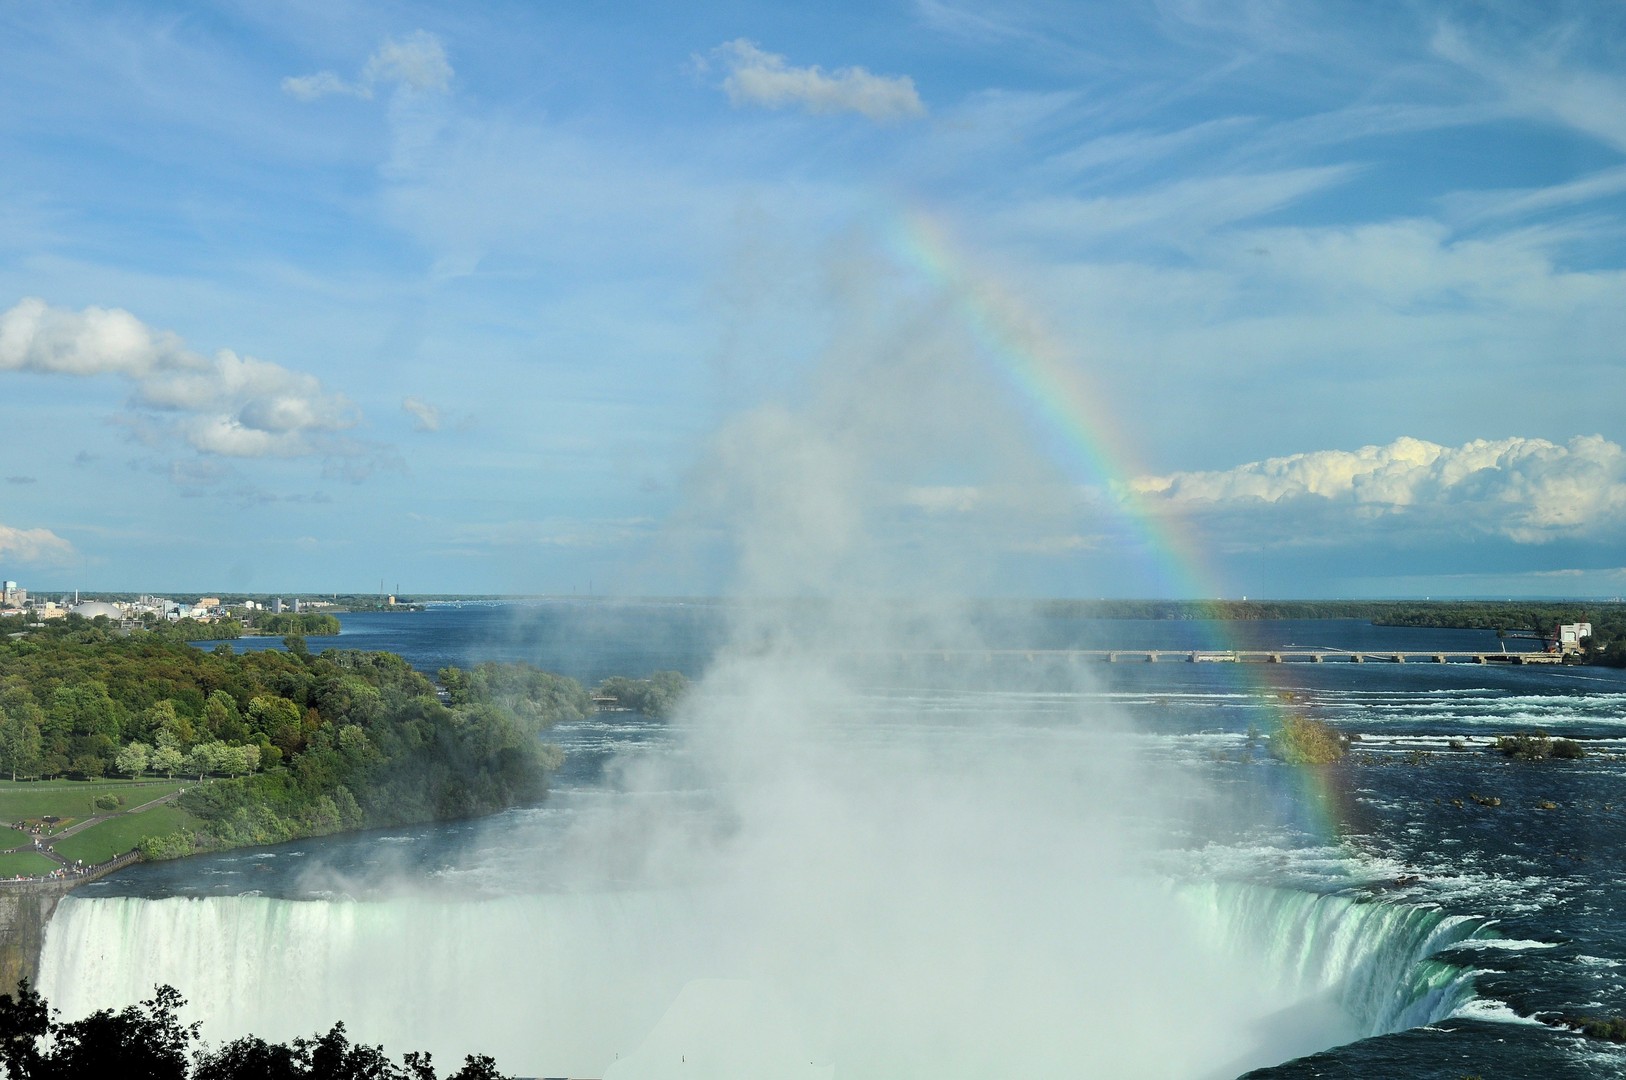 Horseshoe Falls (Niagara Falls) from our hotel room